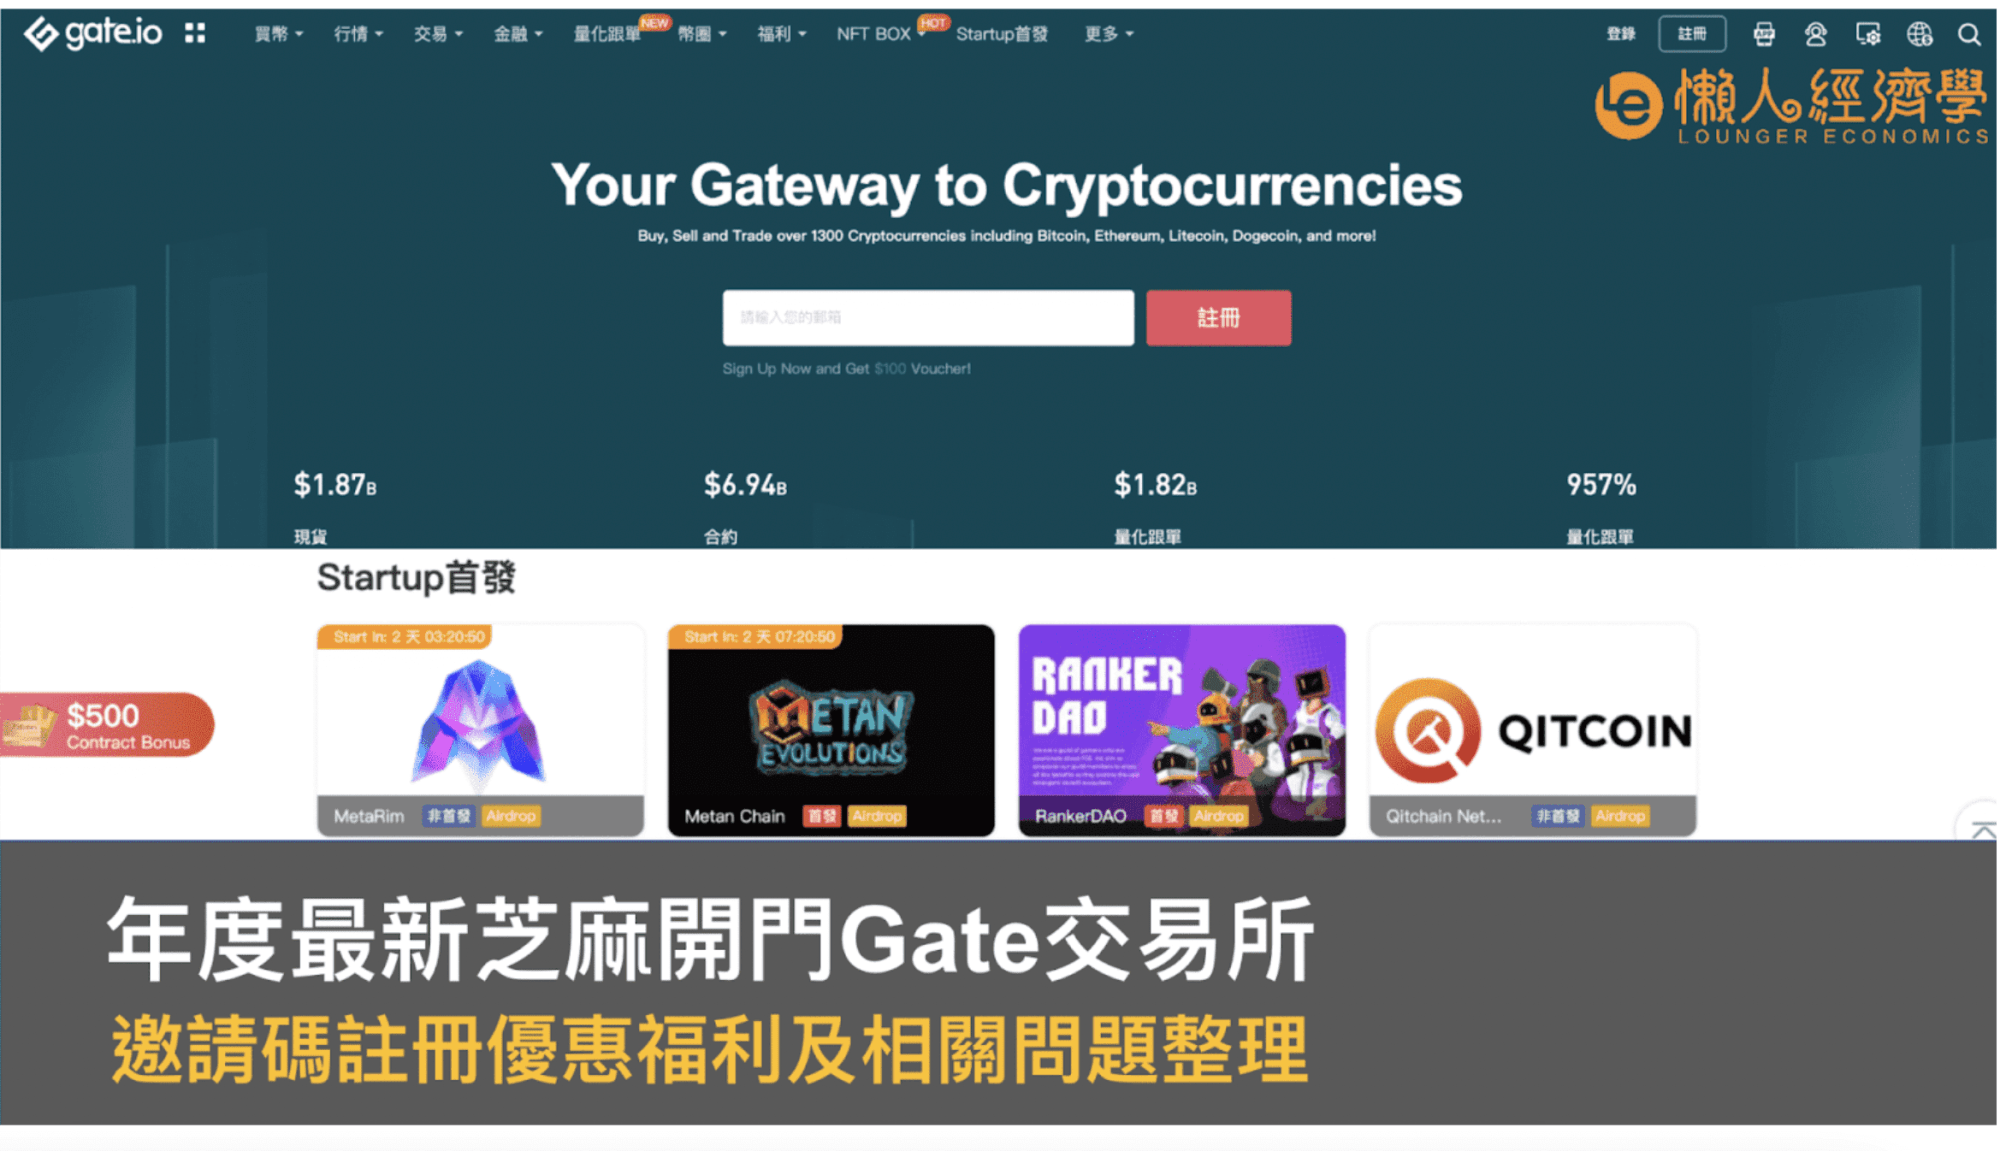 Gate.io 邀请码送20%手续费返佣、5,500U理财体验金，芝麻开门优惠福利及相关问题整理